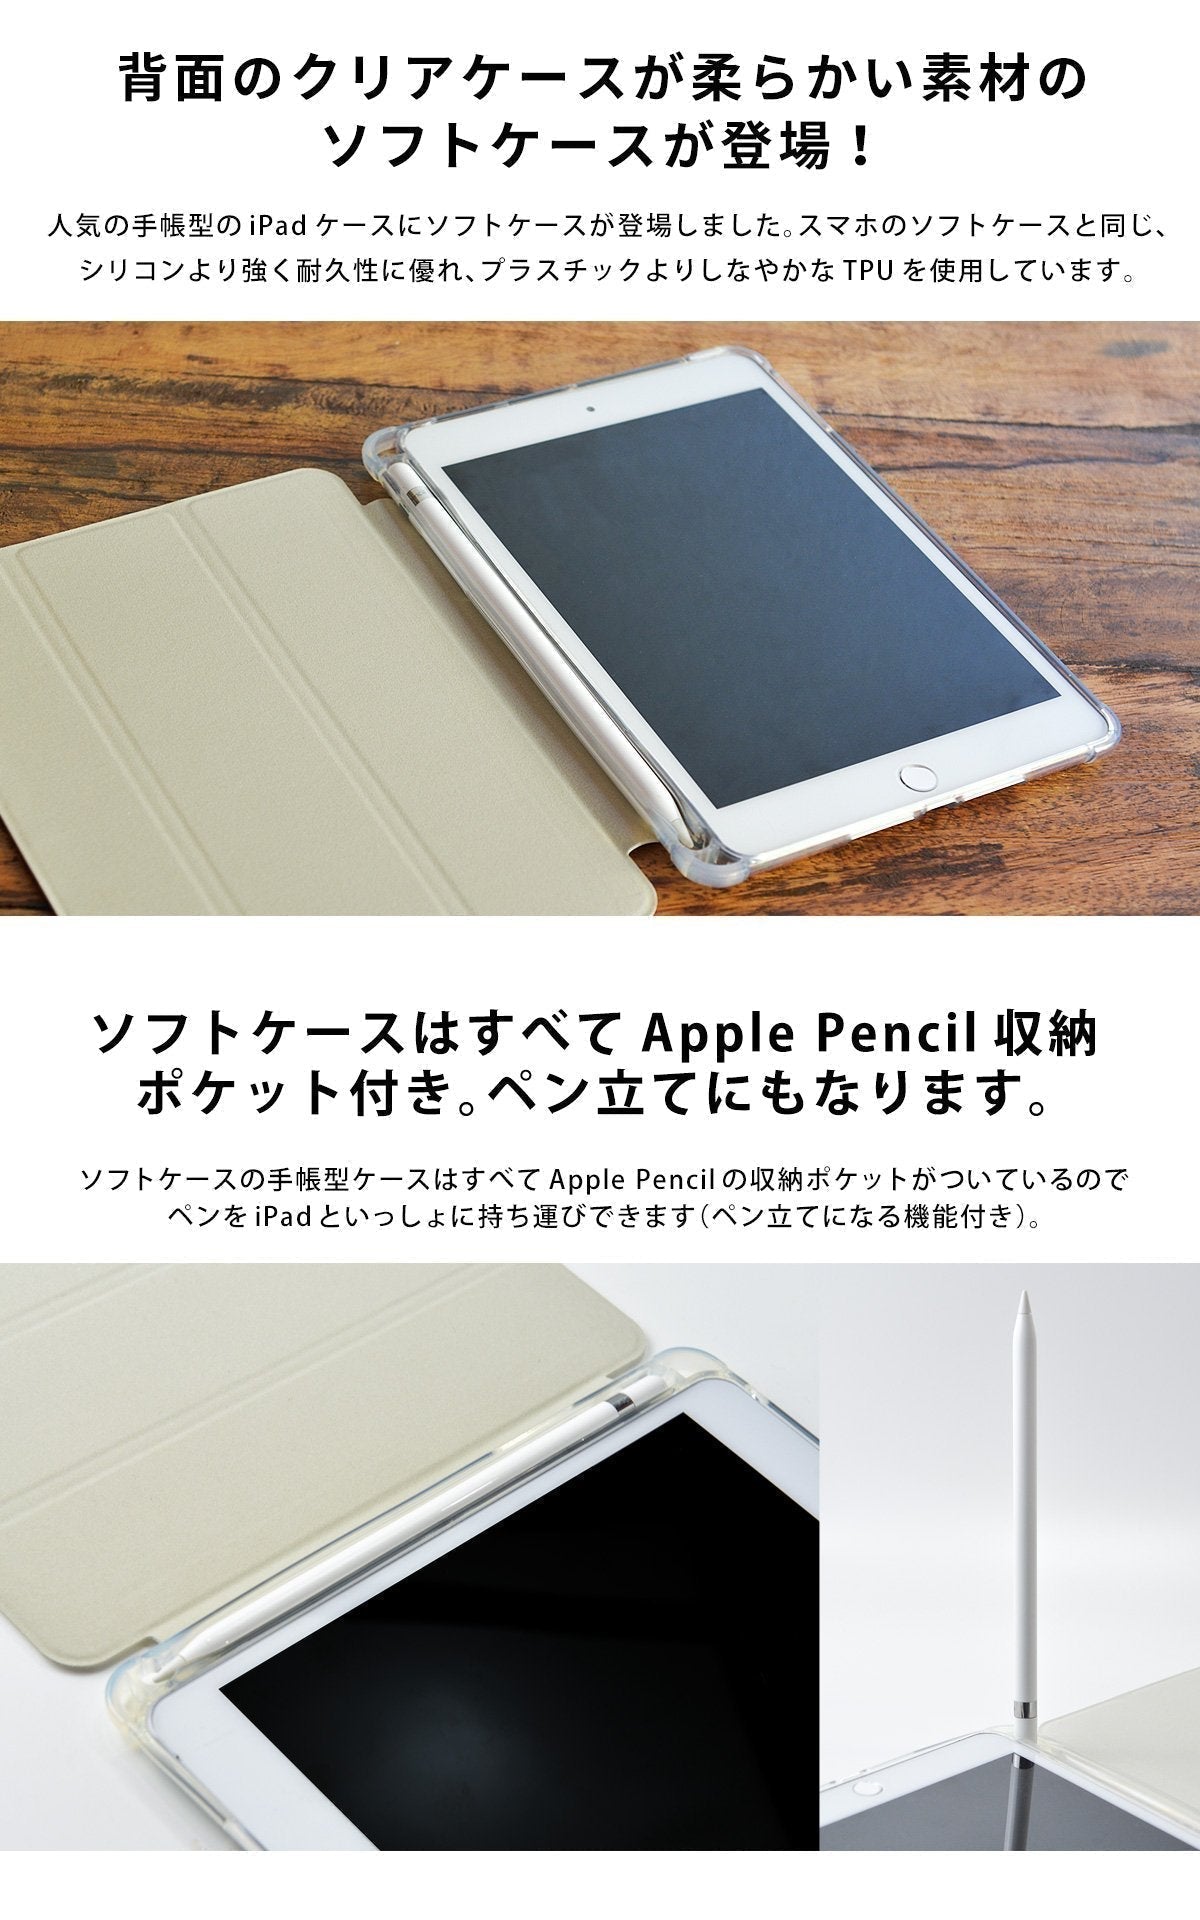 iPad【256GB】iPad Pro 9.7インチ Apple Pencil 付き